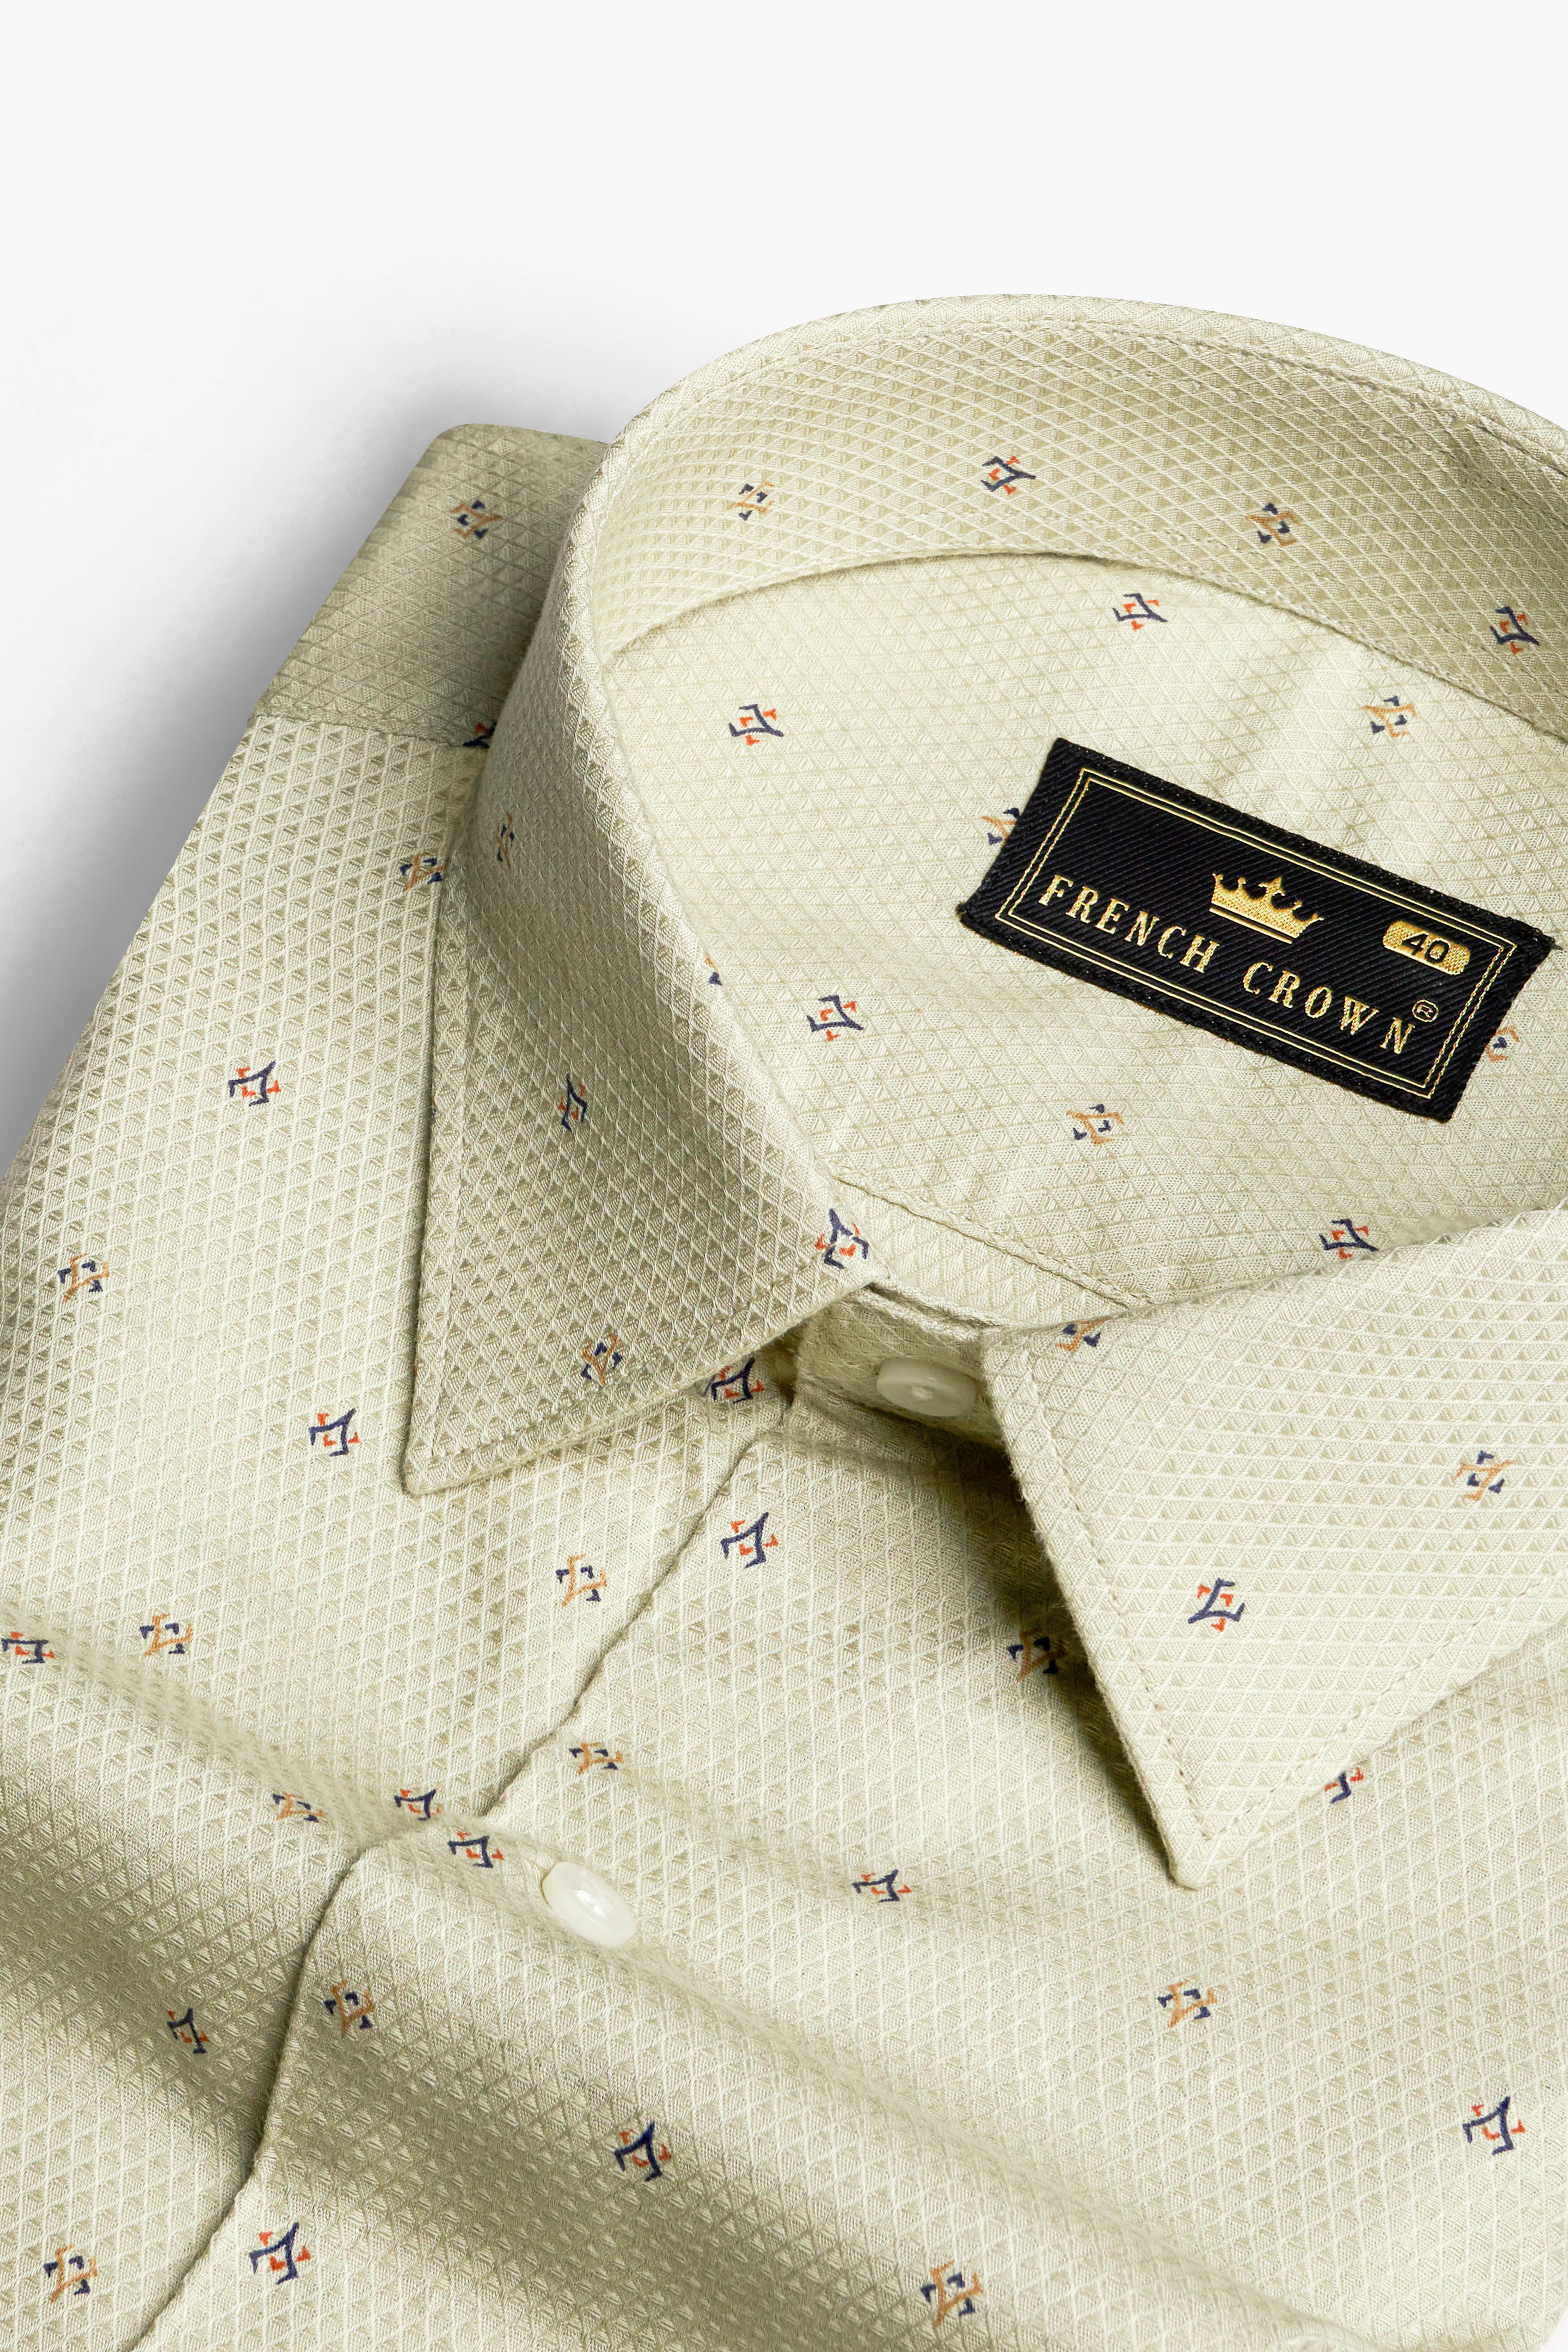 Beryl Green Dobby Textured Premium Giza Cotton Shirt